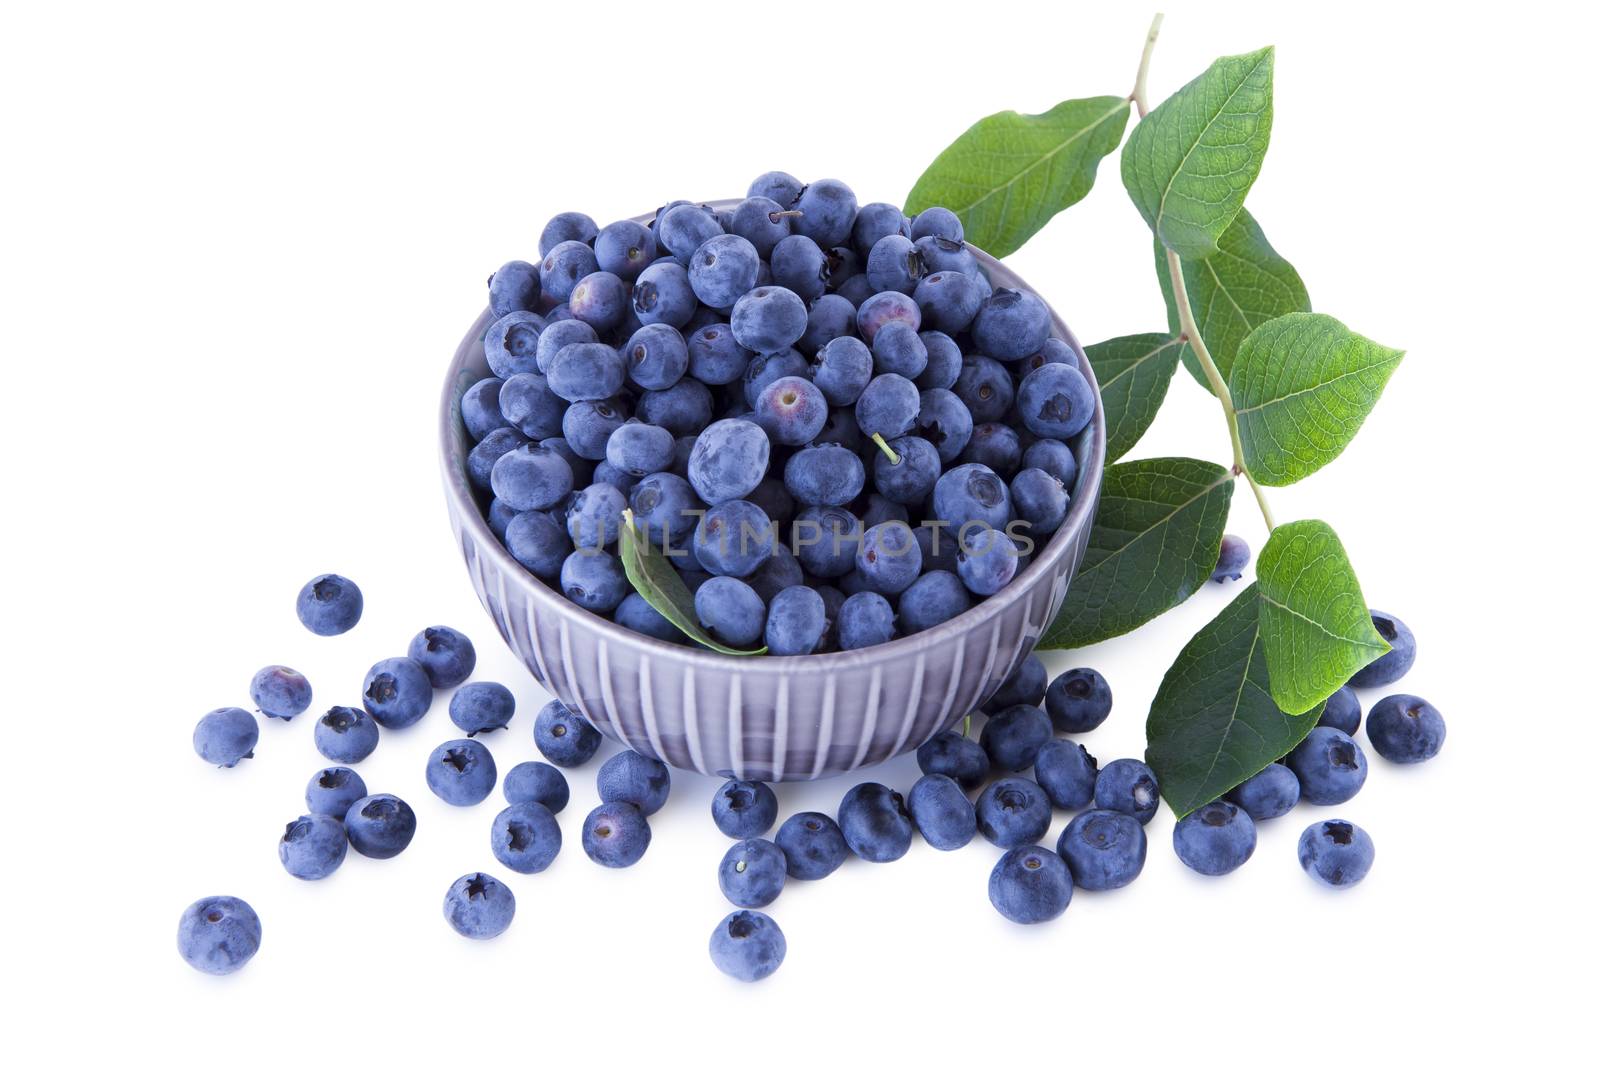 Fresh blueberries in a bowl by Gbuglok